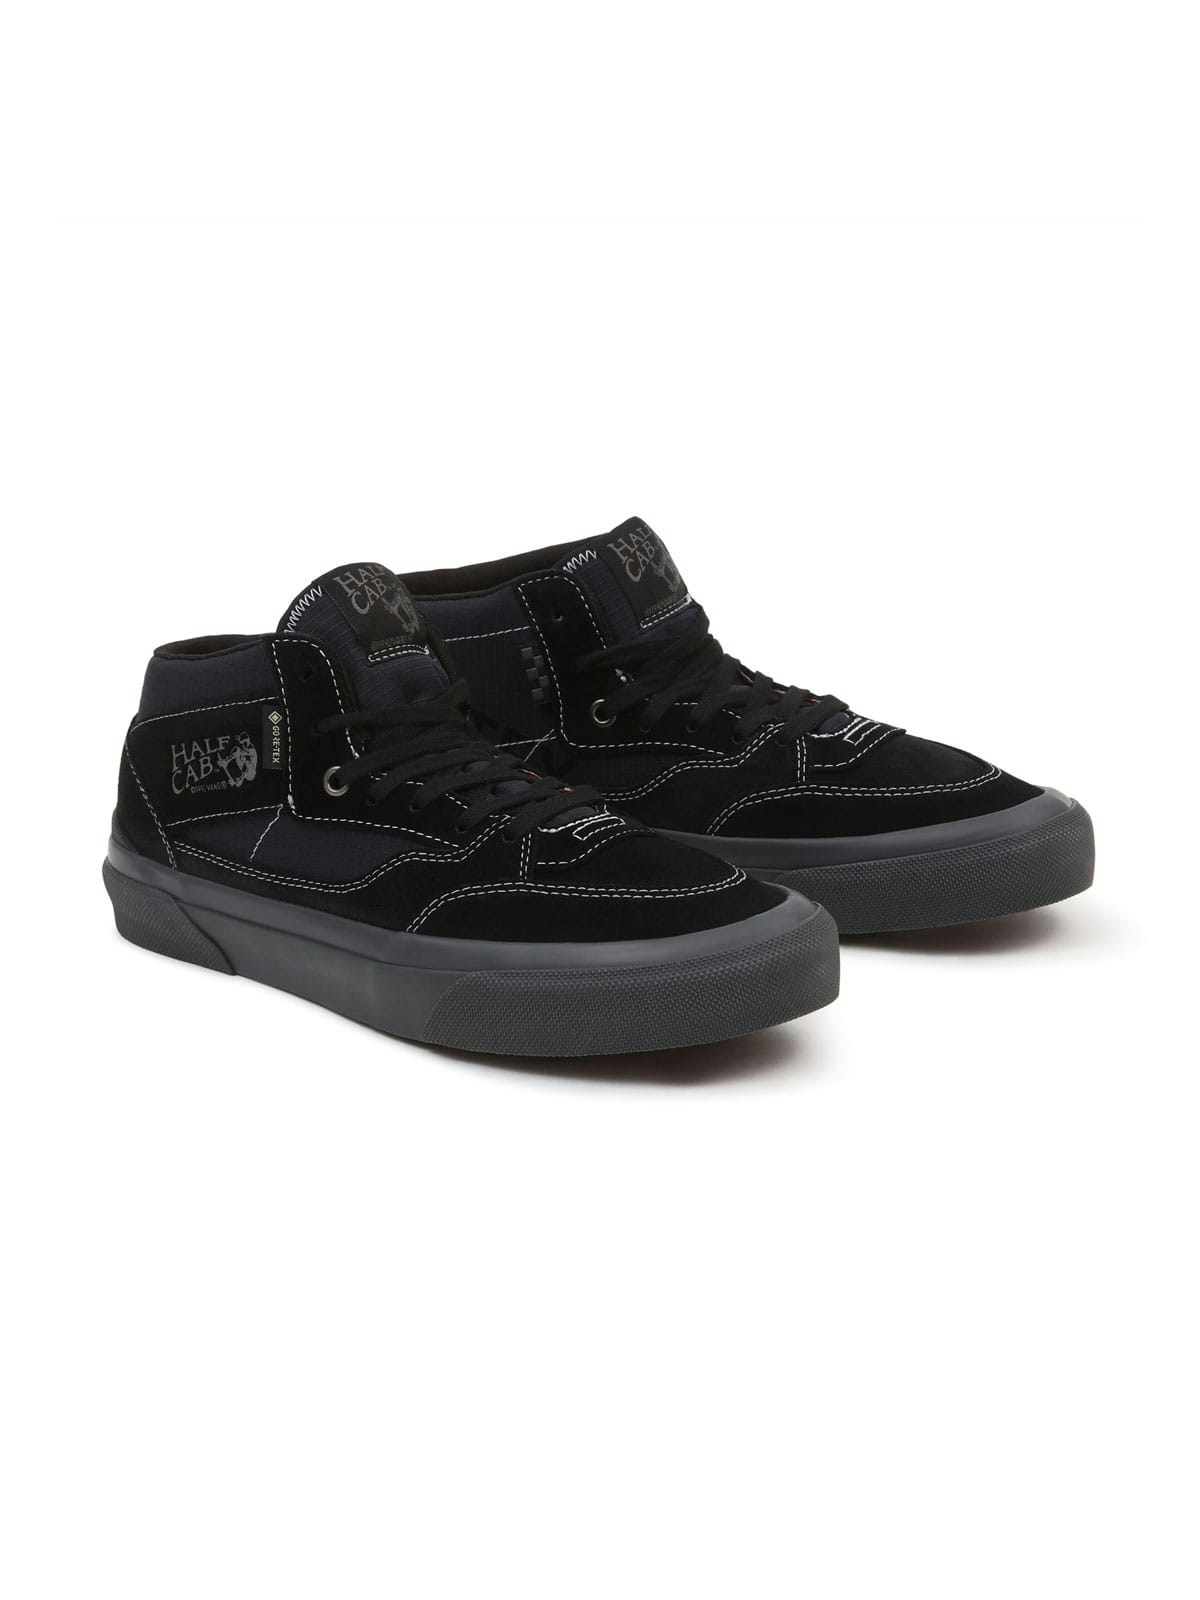 Vans Skate Half Cab '92 GORE-TEX Shoes Black 1